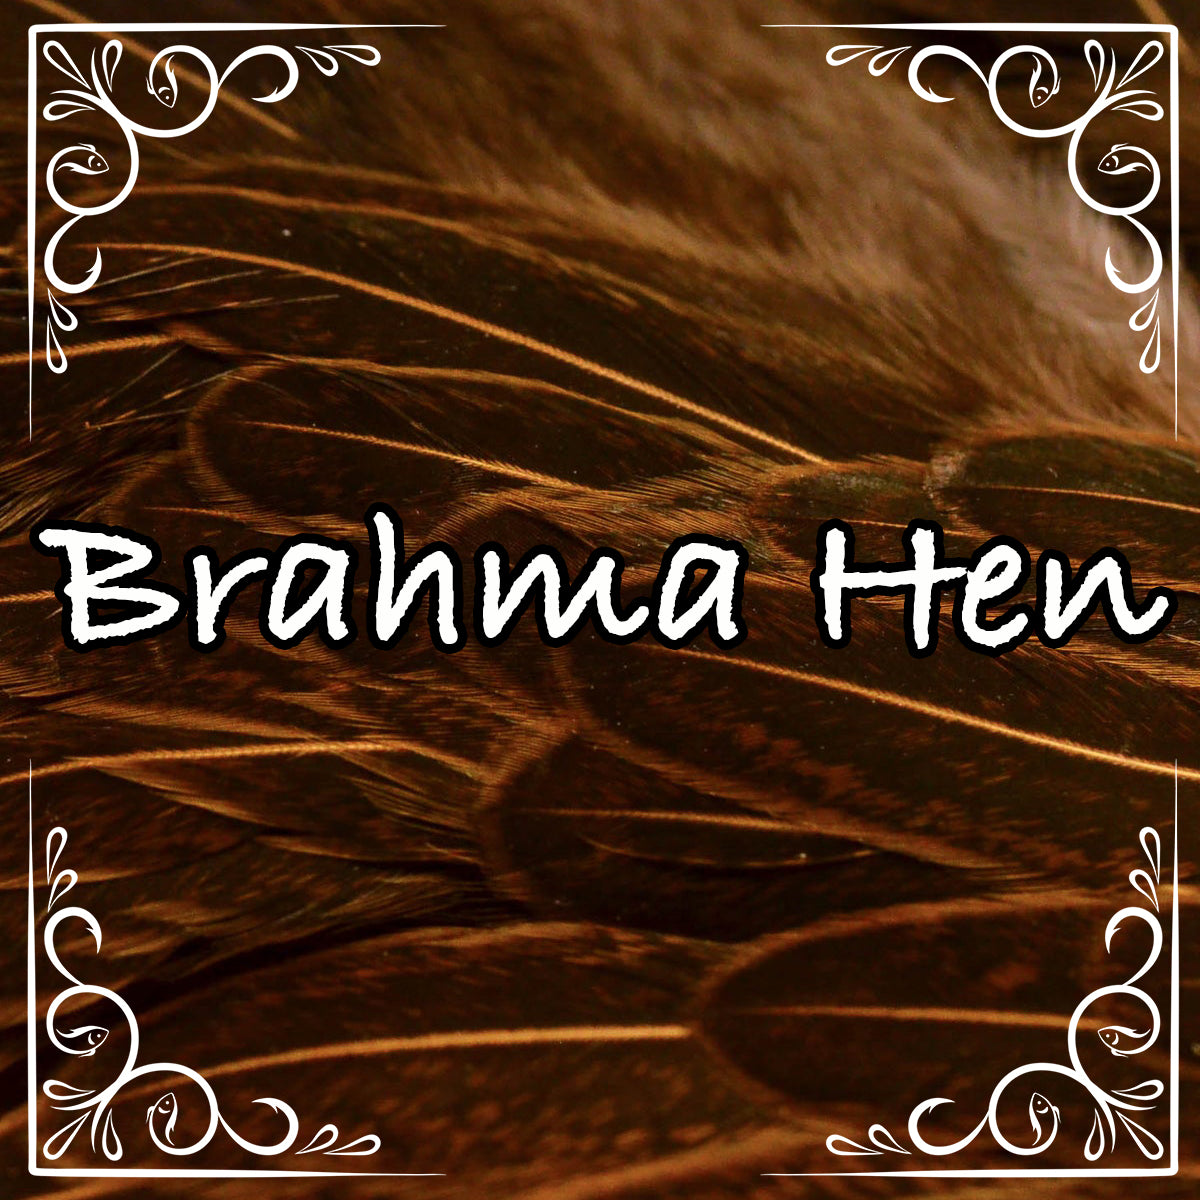 Whiting Brahma Hen